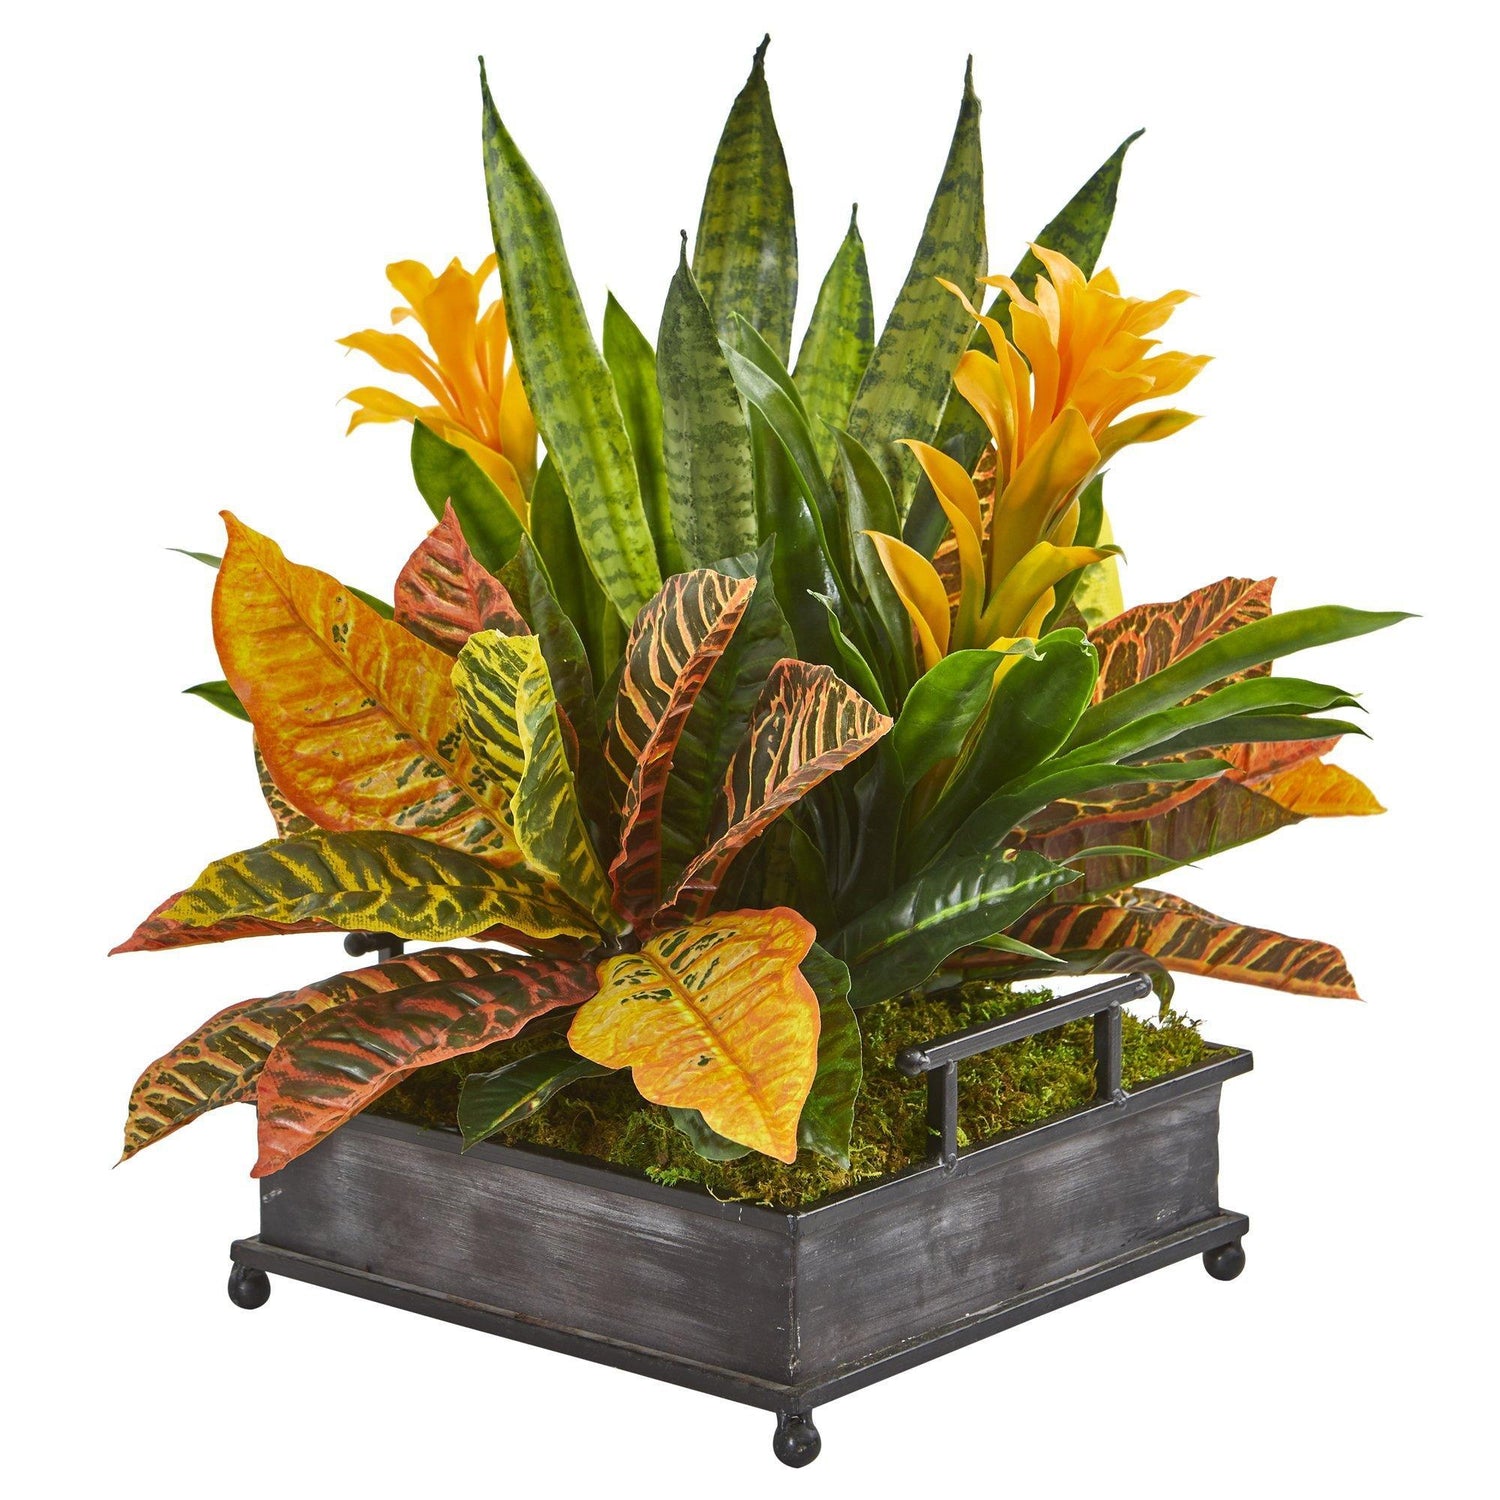 18” Bromeliad, Croton and Sansevieria Artificial Plant in Decorative Tray